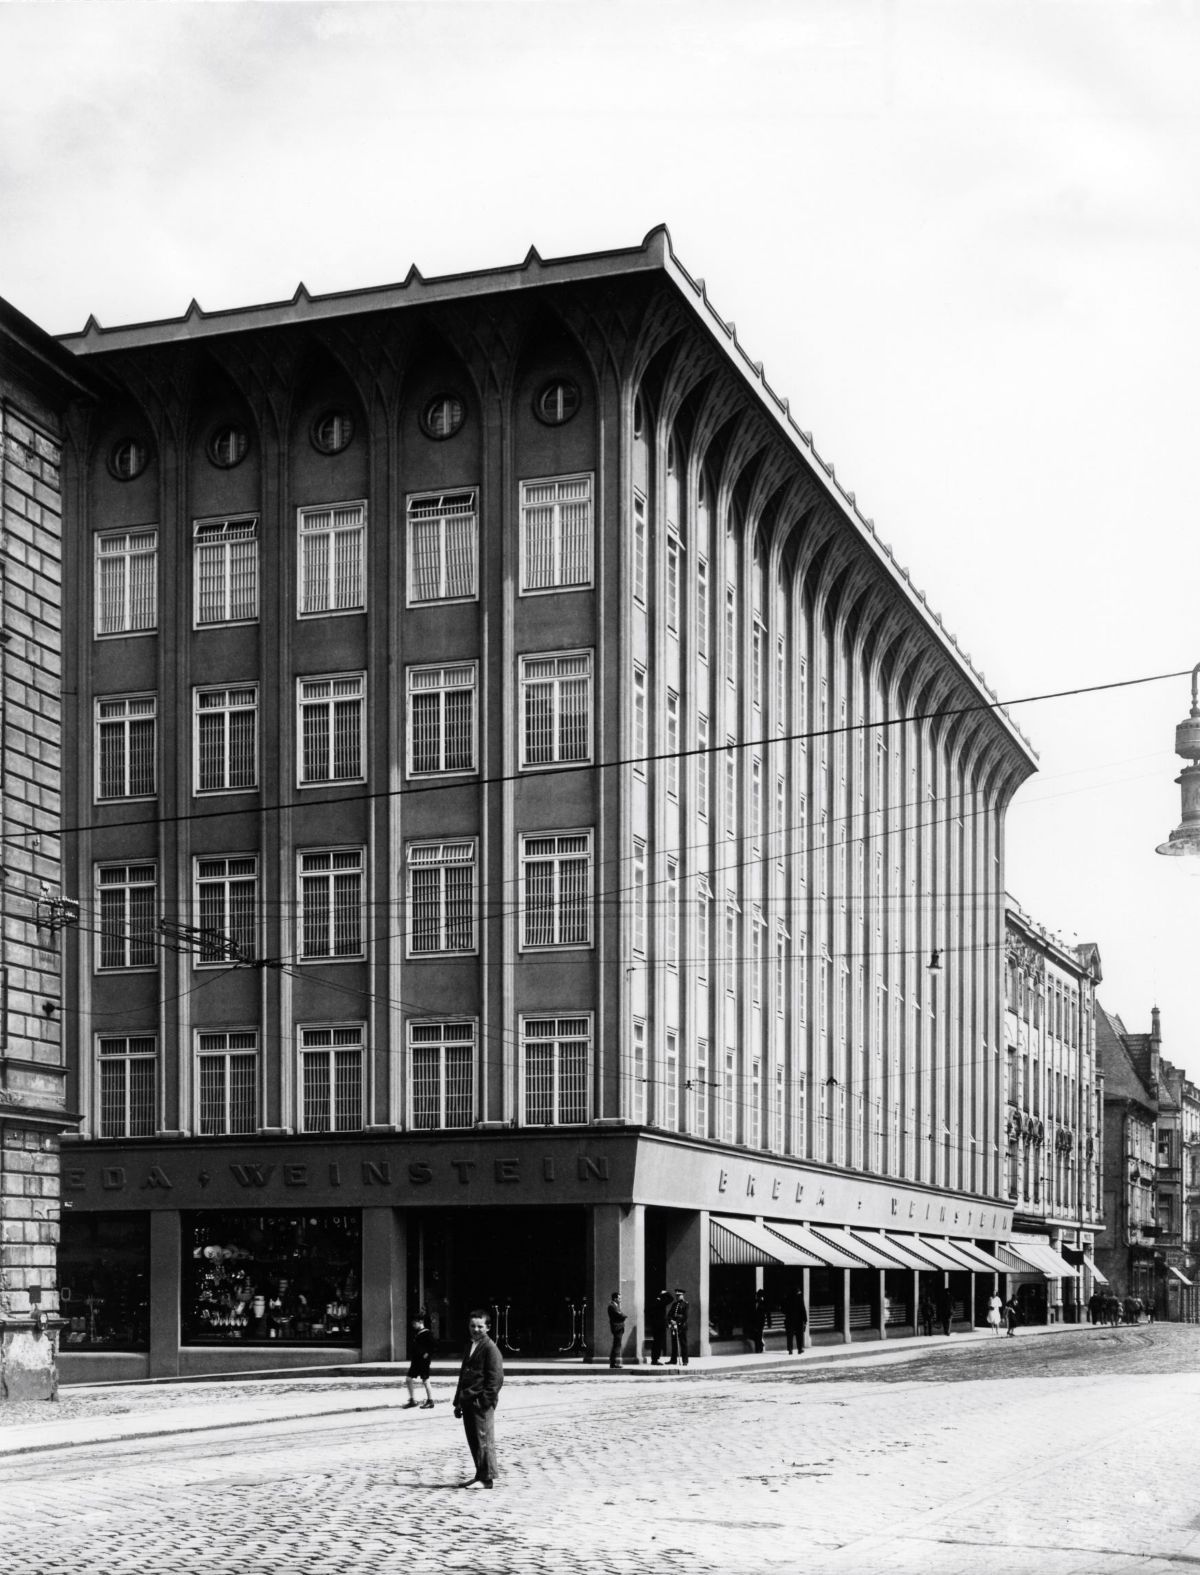 Obchodní dům Breda a Weinstein, Opava